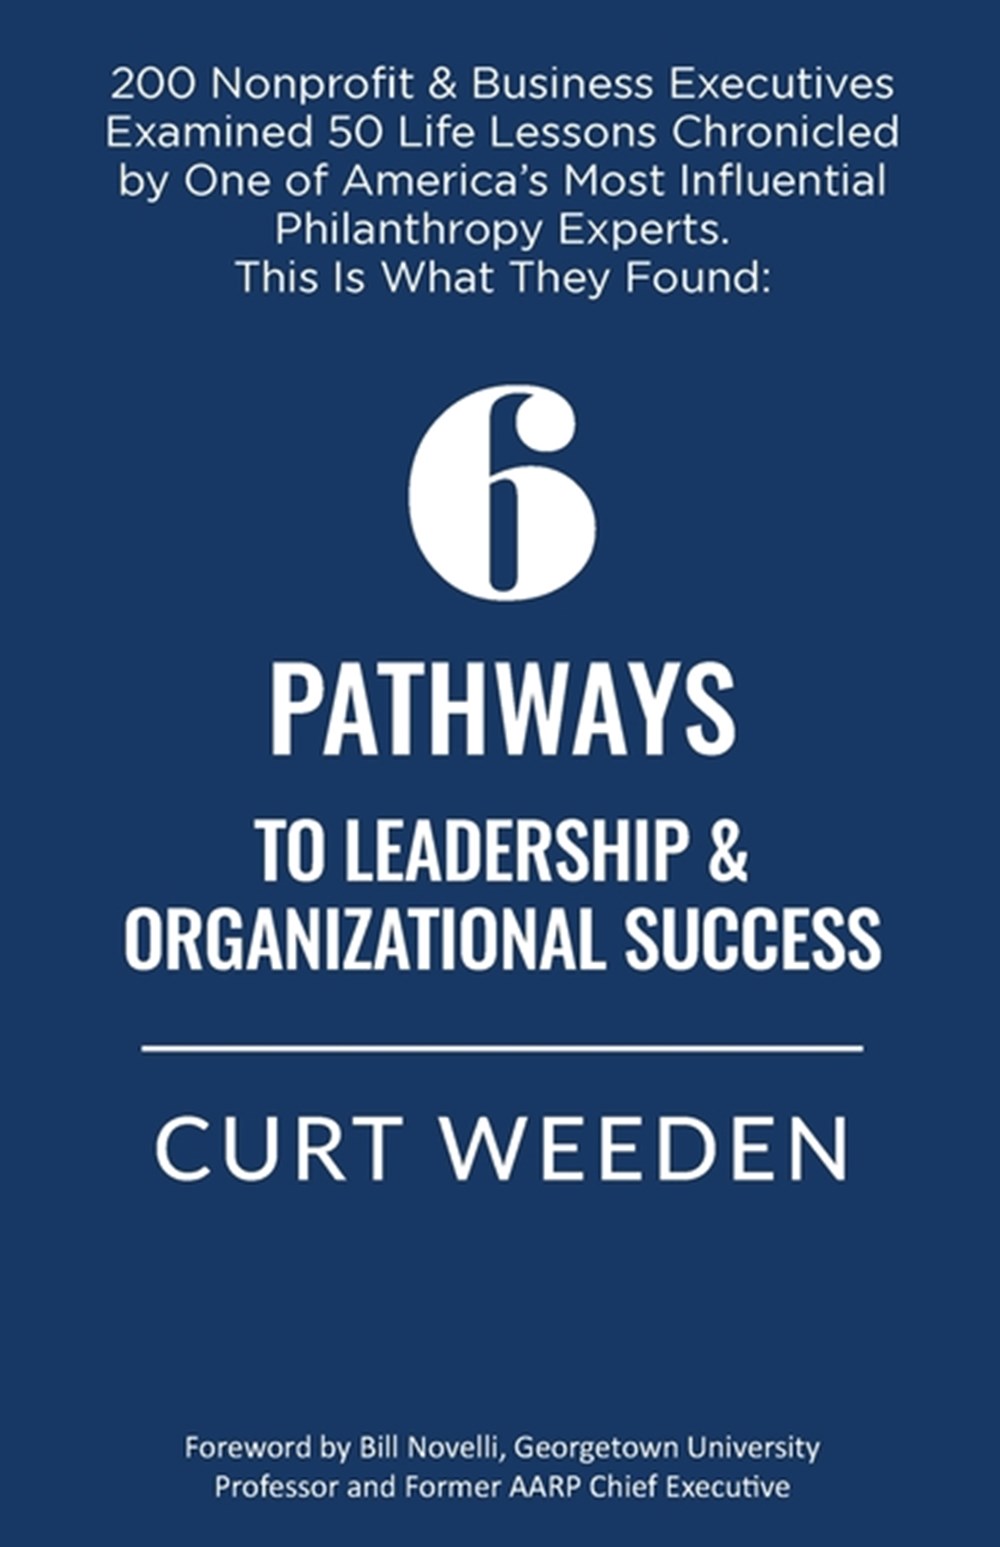 6 Pathways to Leadership & Organizational Success